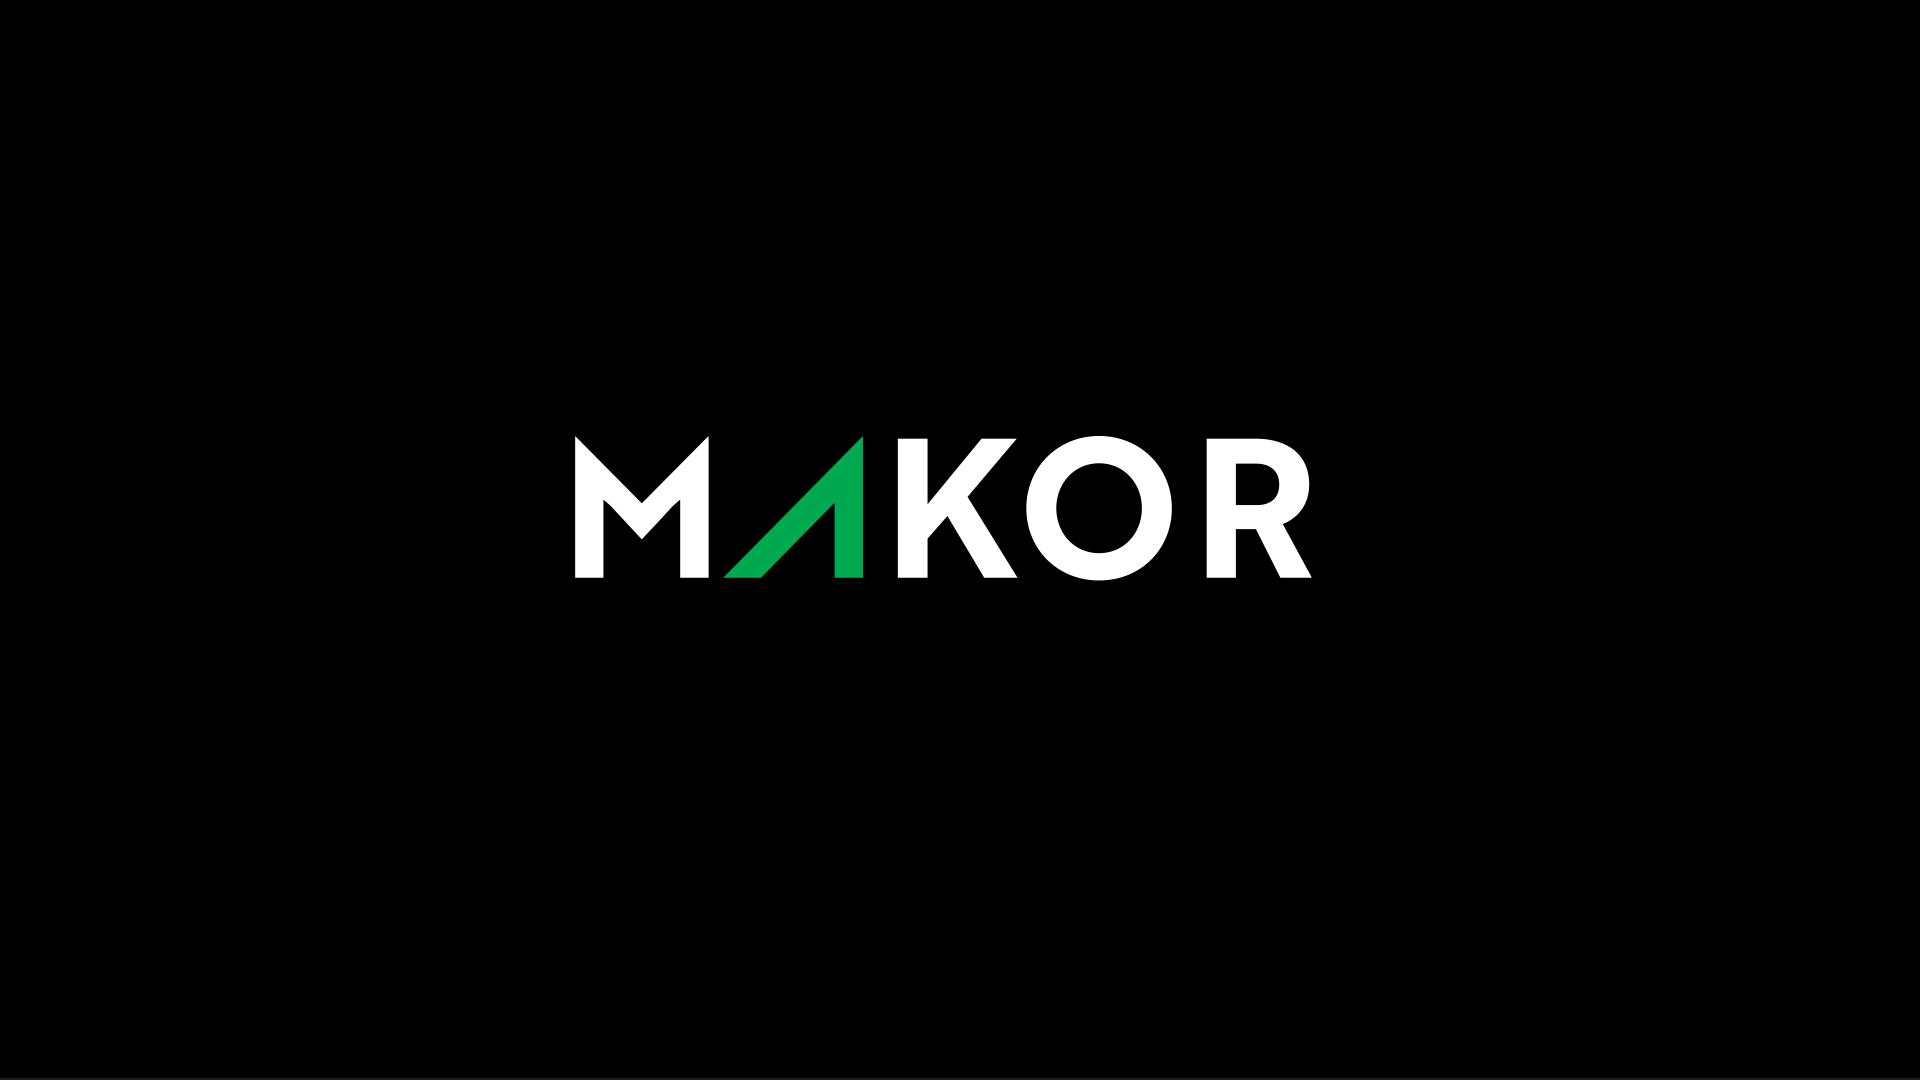 makor logo on black background